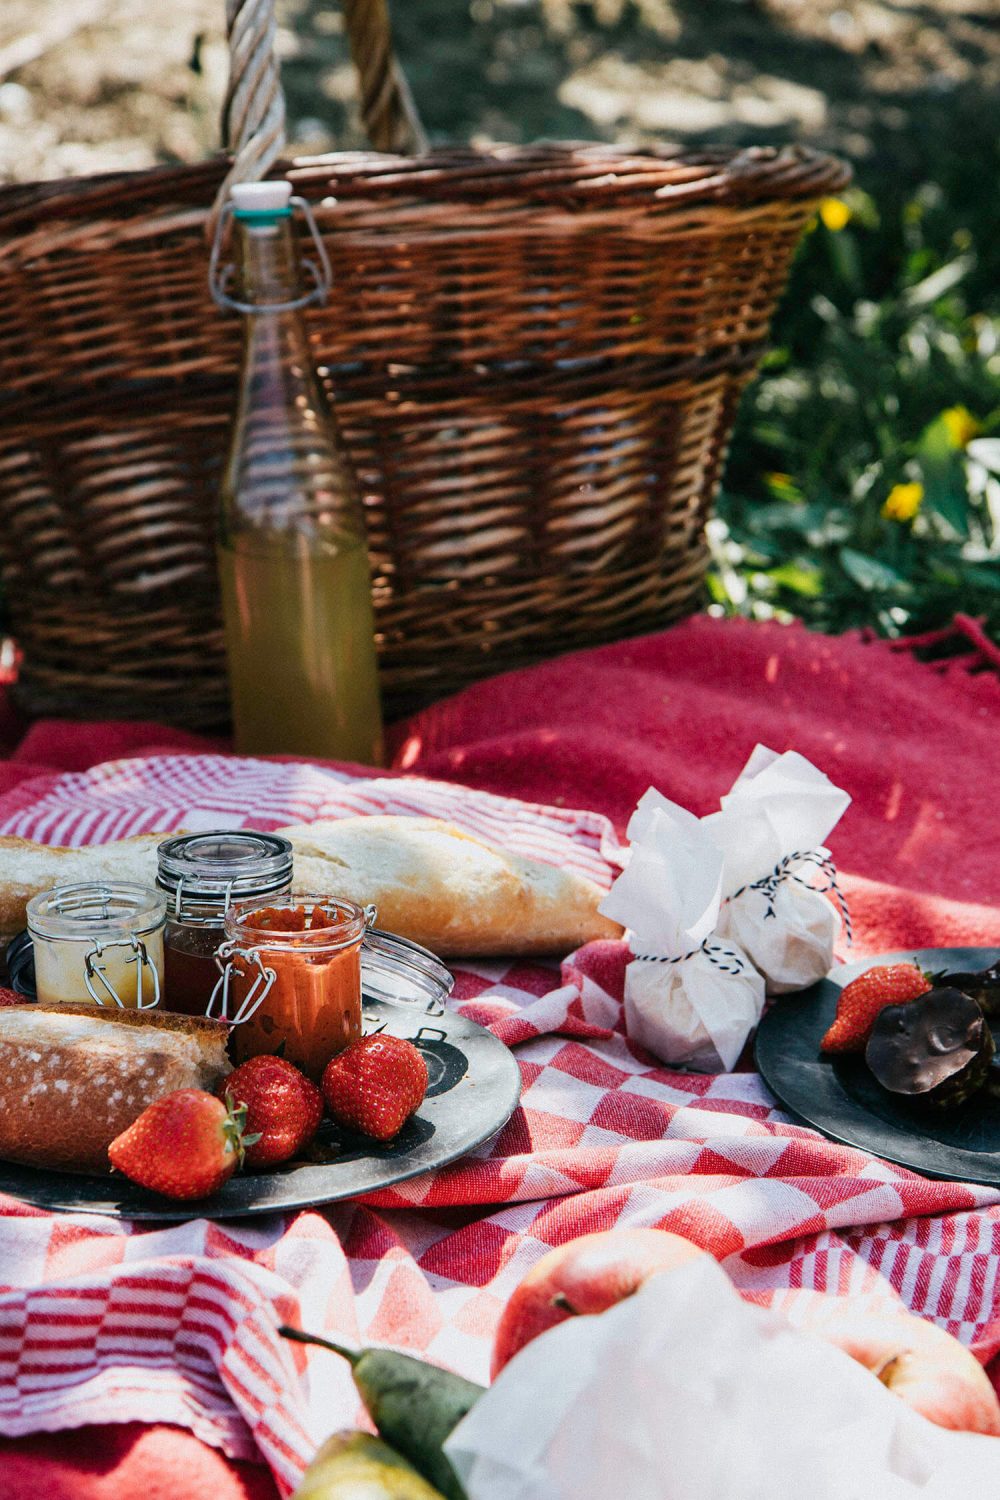 Picknicken tussen de bloesems in Borgloon